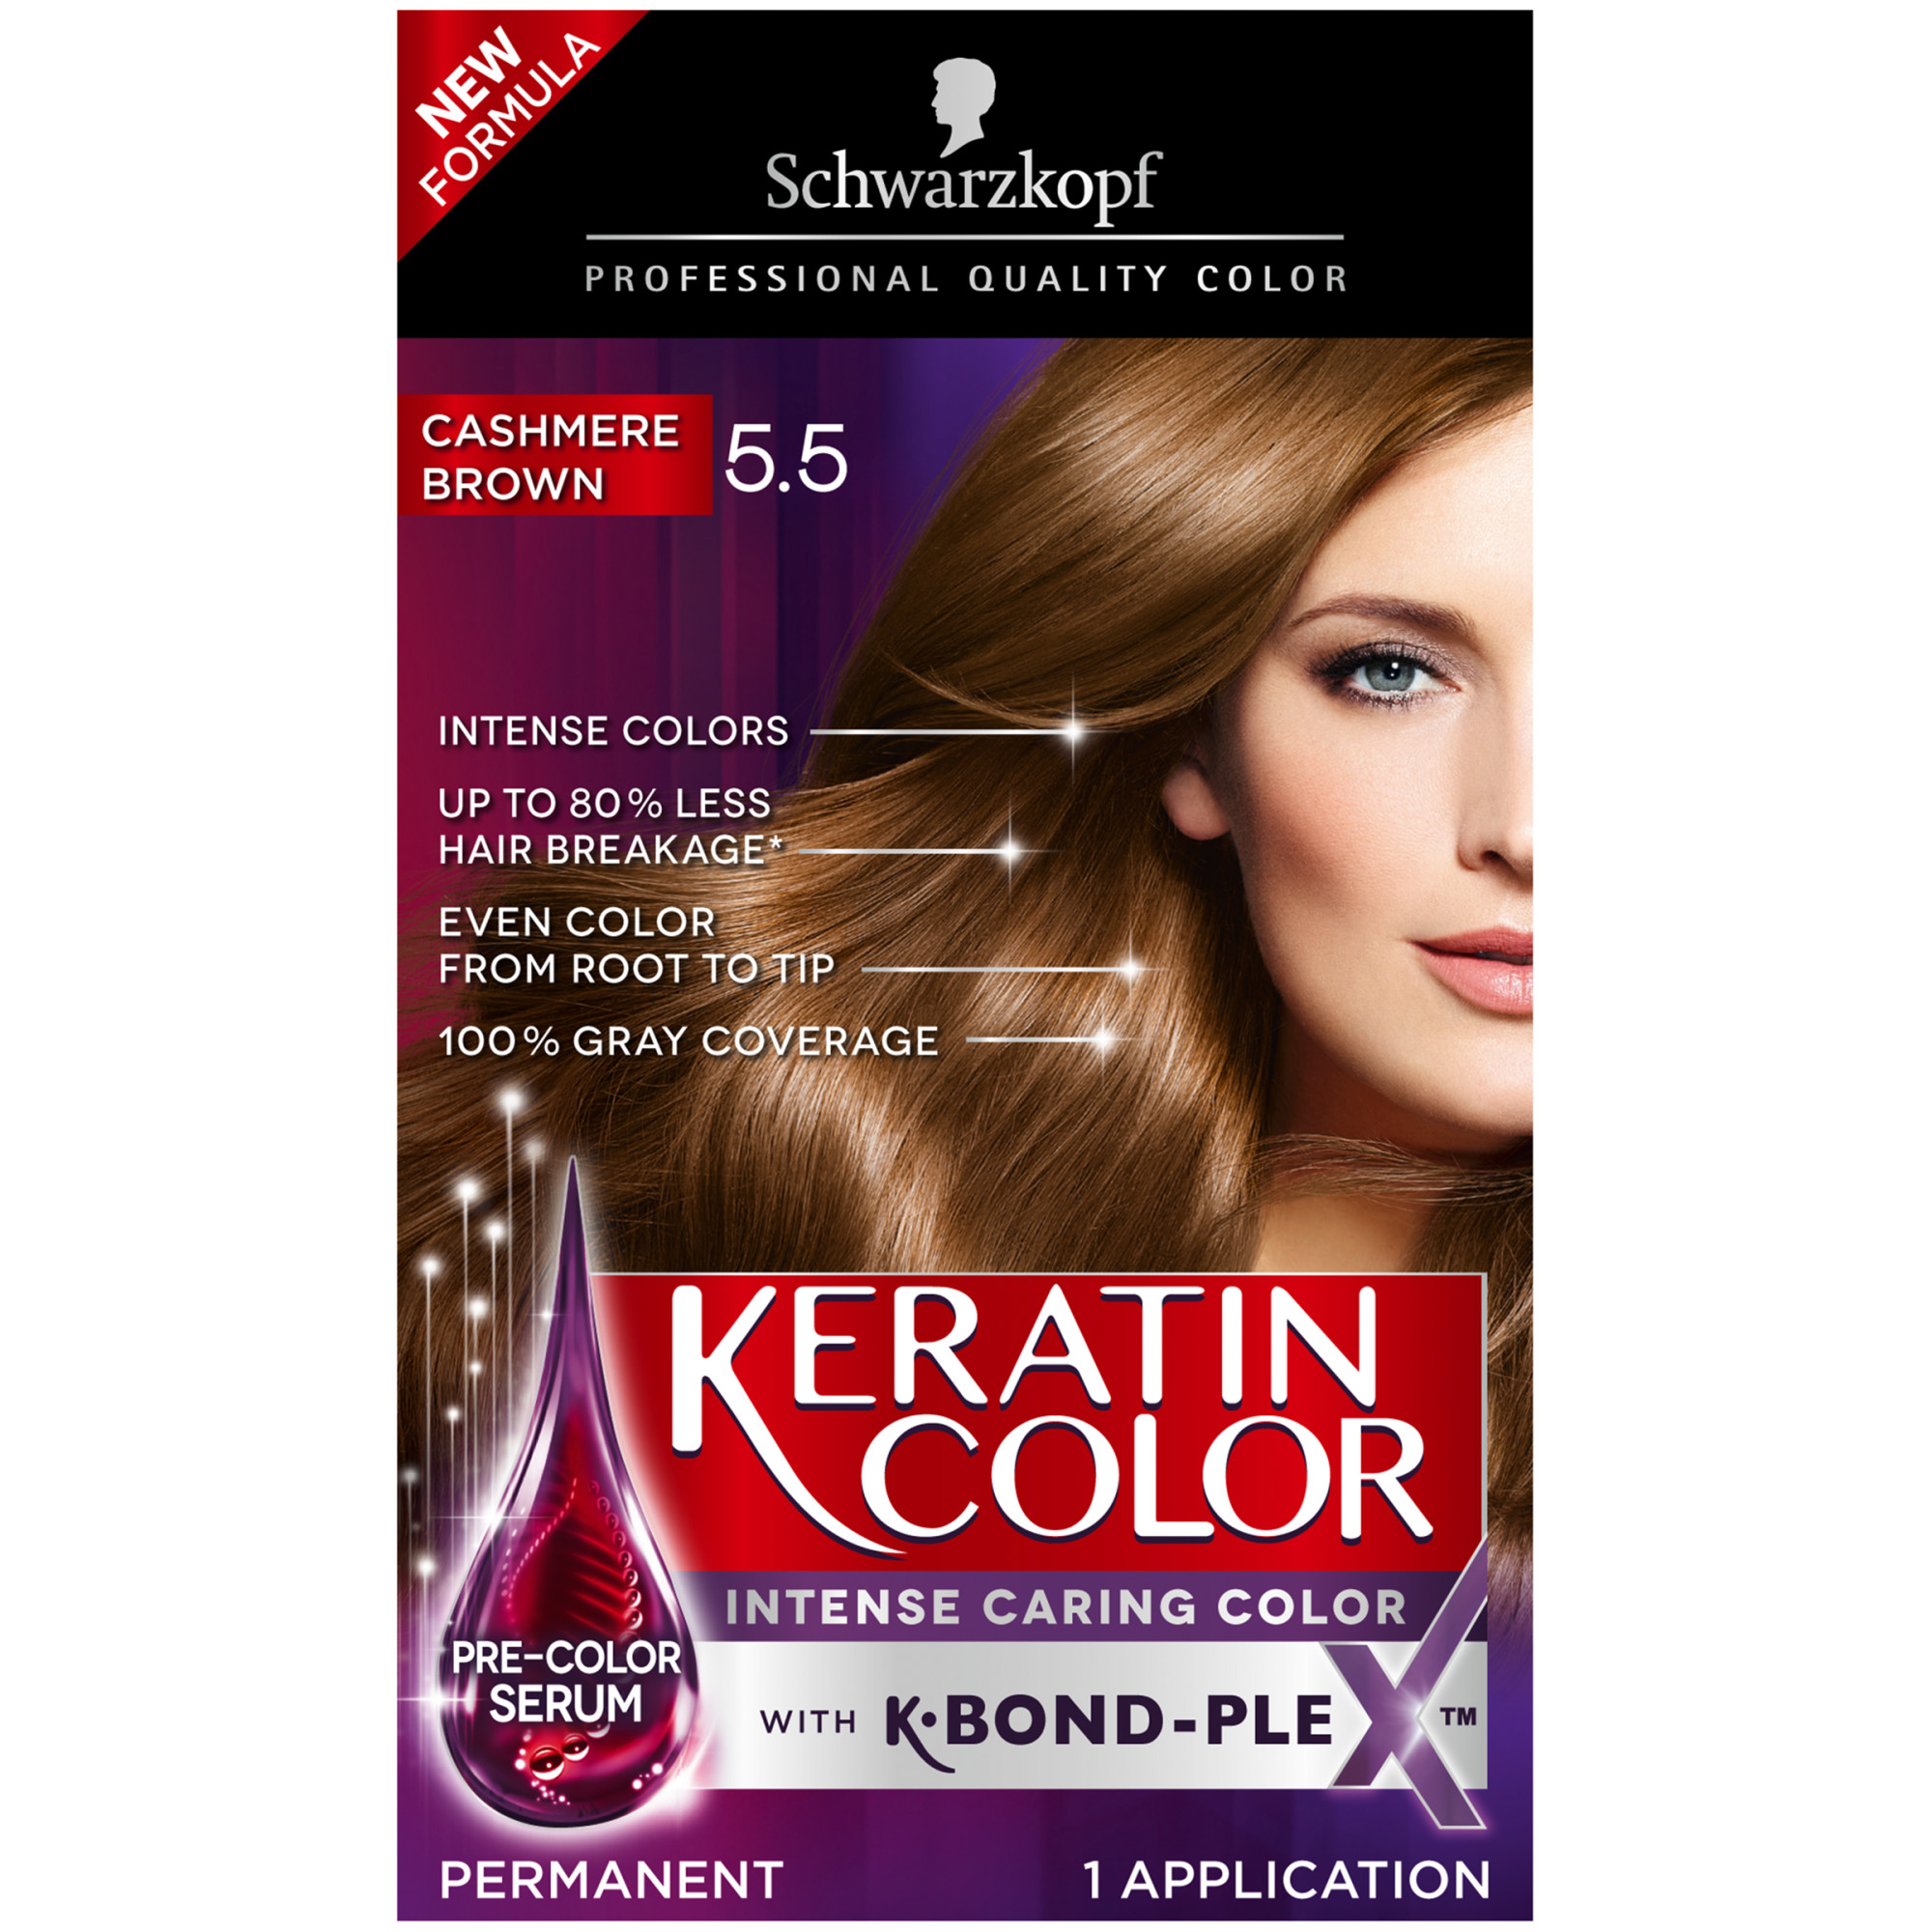 Schwarzkopf Keratin Color Permanent Hair Color Cream, 5.5 Cashmere Brown - image 3 of 10